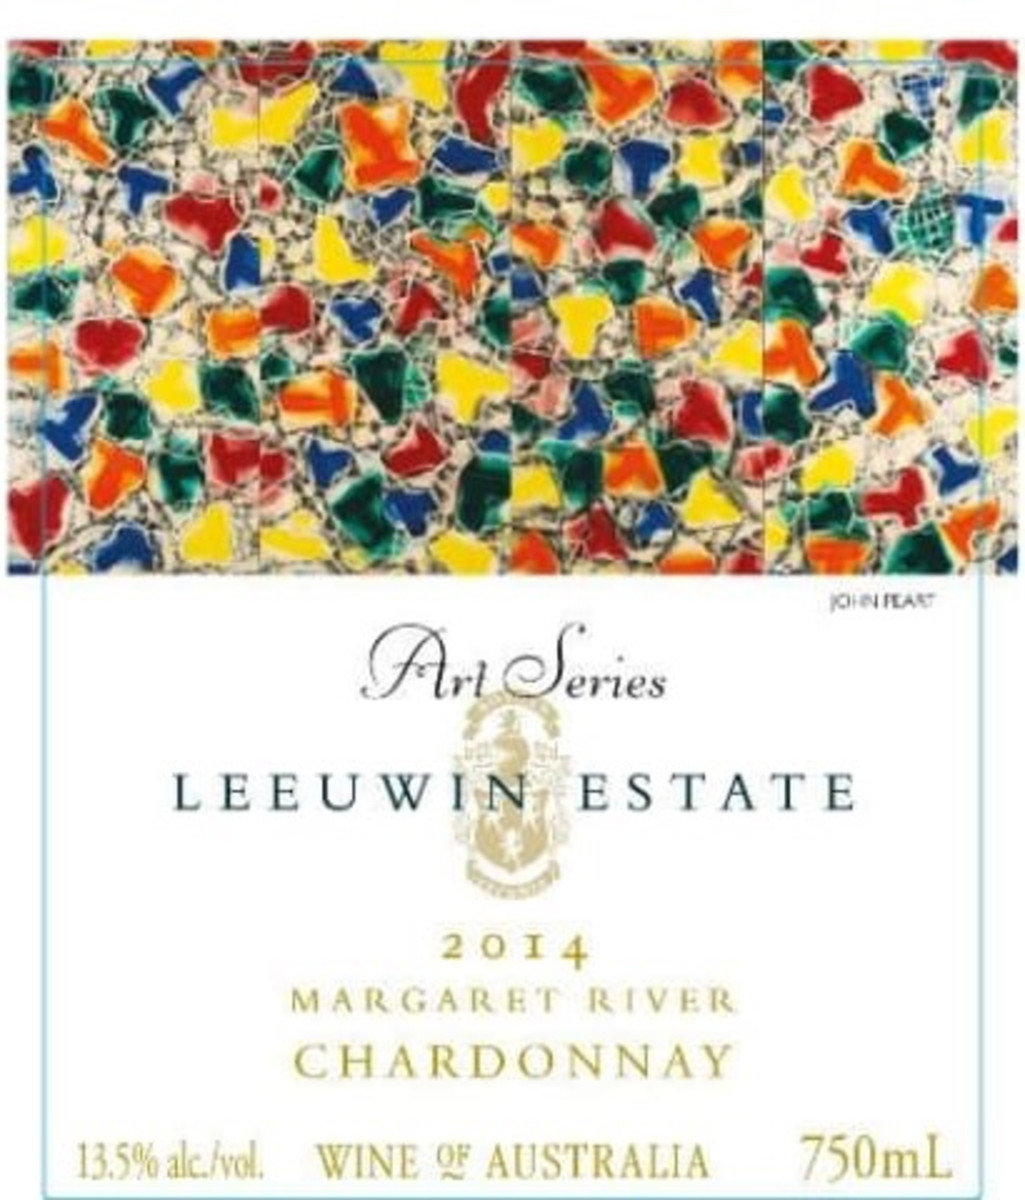 2016 Leeuwin Chardonnay Artist Series Margaret River - click image for full description